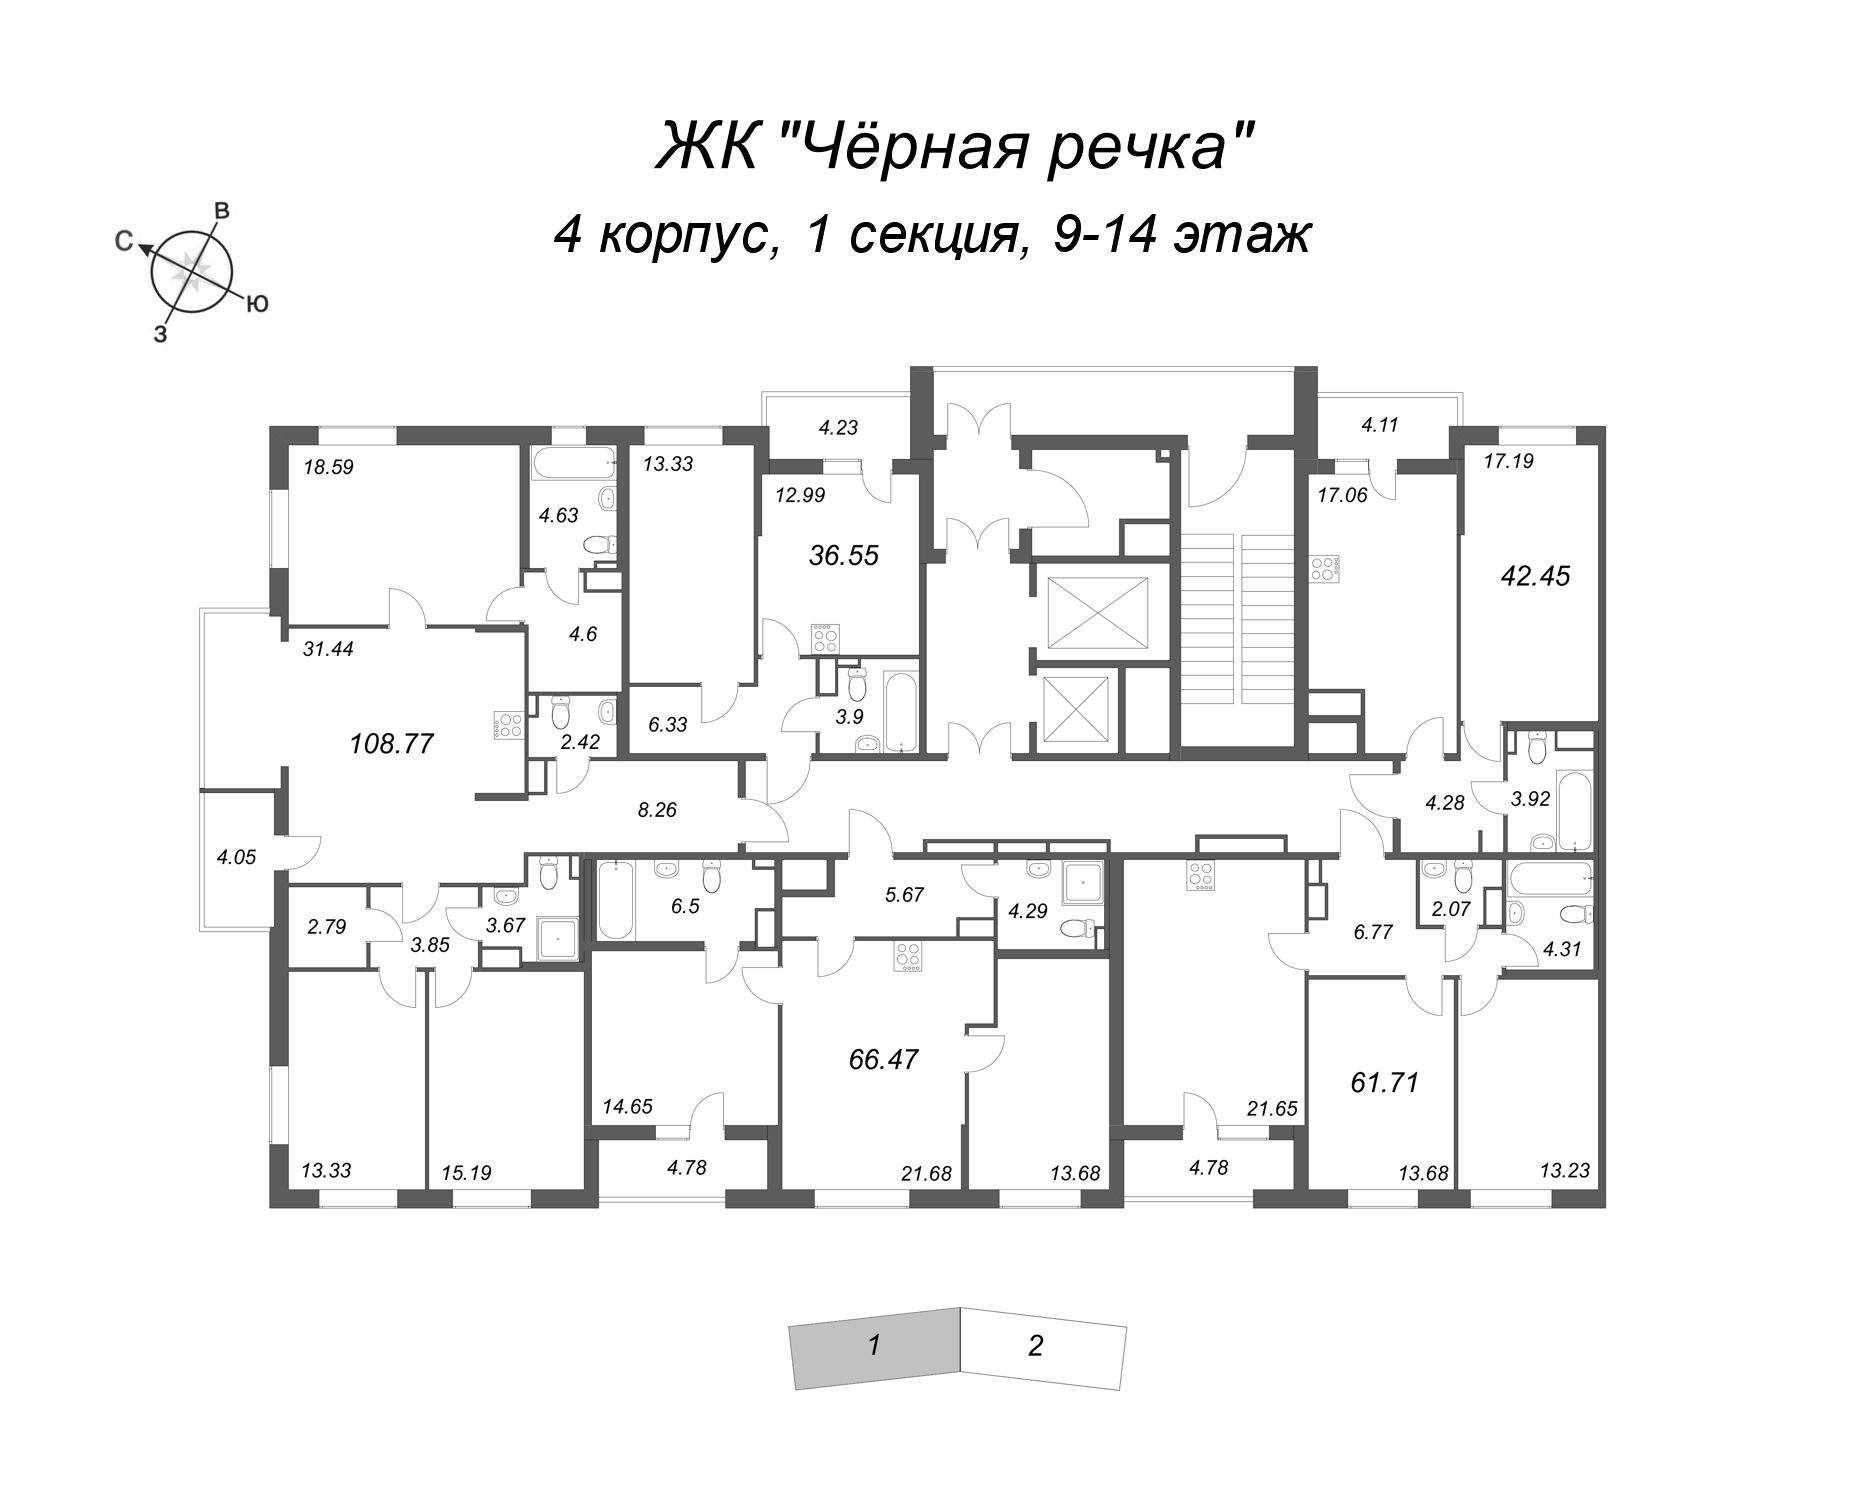 2-комнатная (Евро) квартира, 42.45 м² - планировка этажа